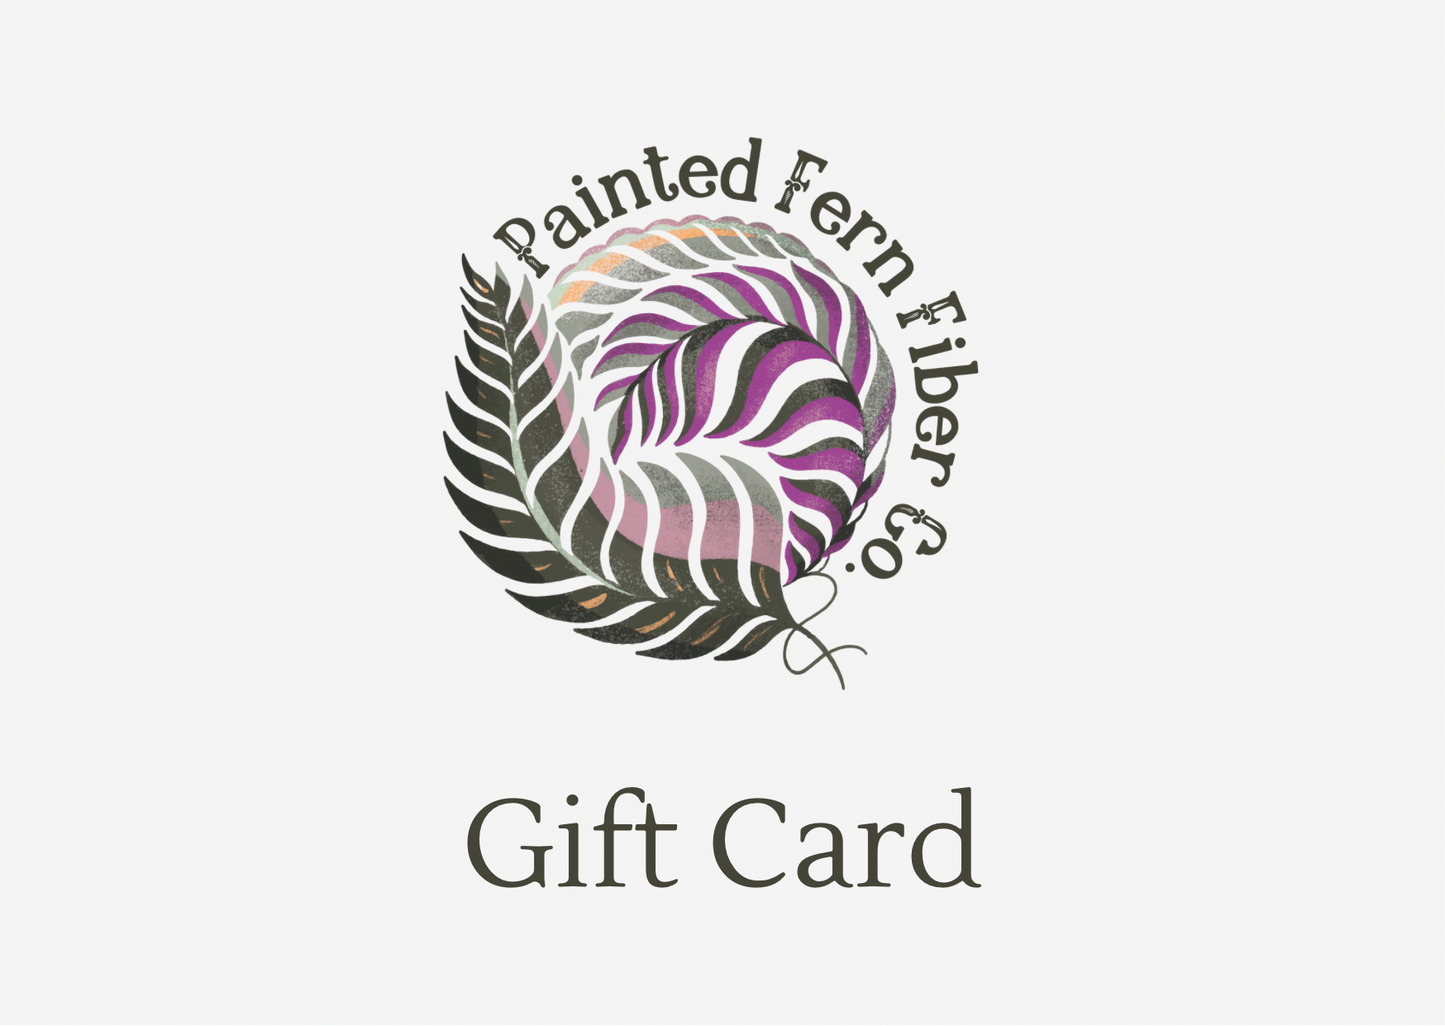 Painted Fern Fiber Company gift card